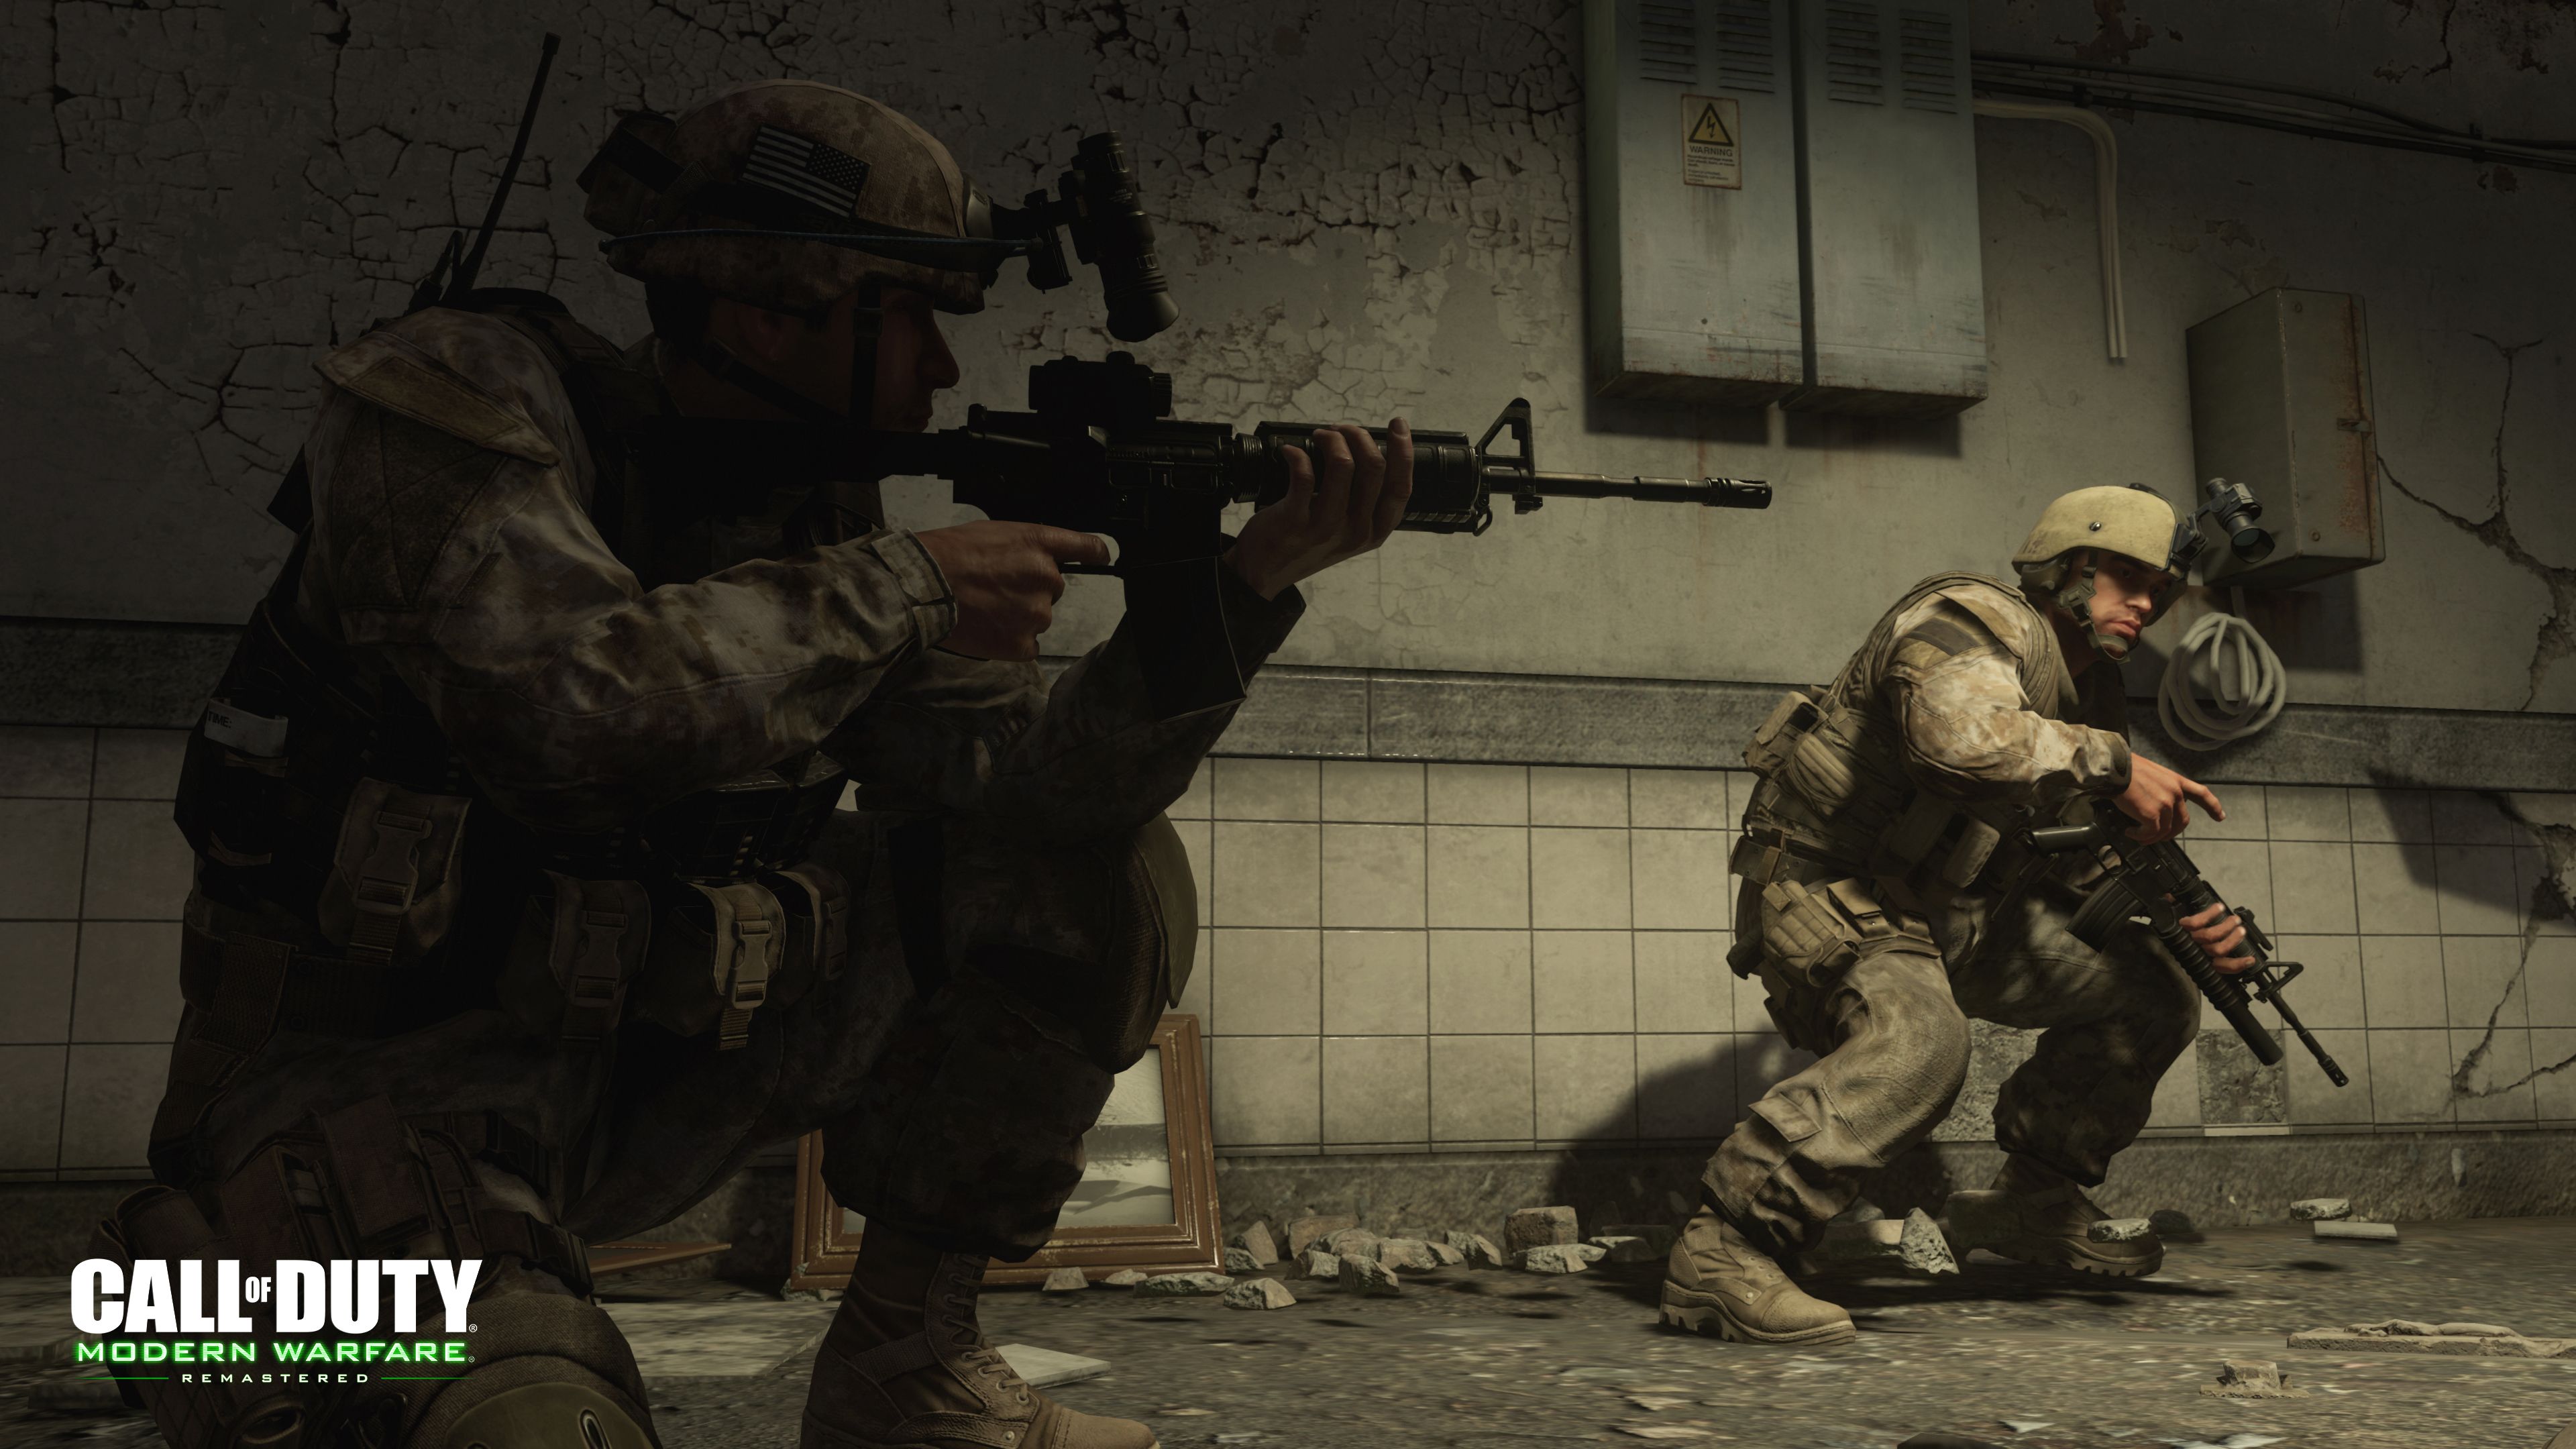 Demolition will make its first appearance in Modern Warfare